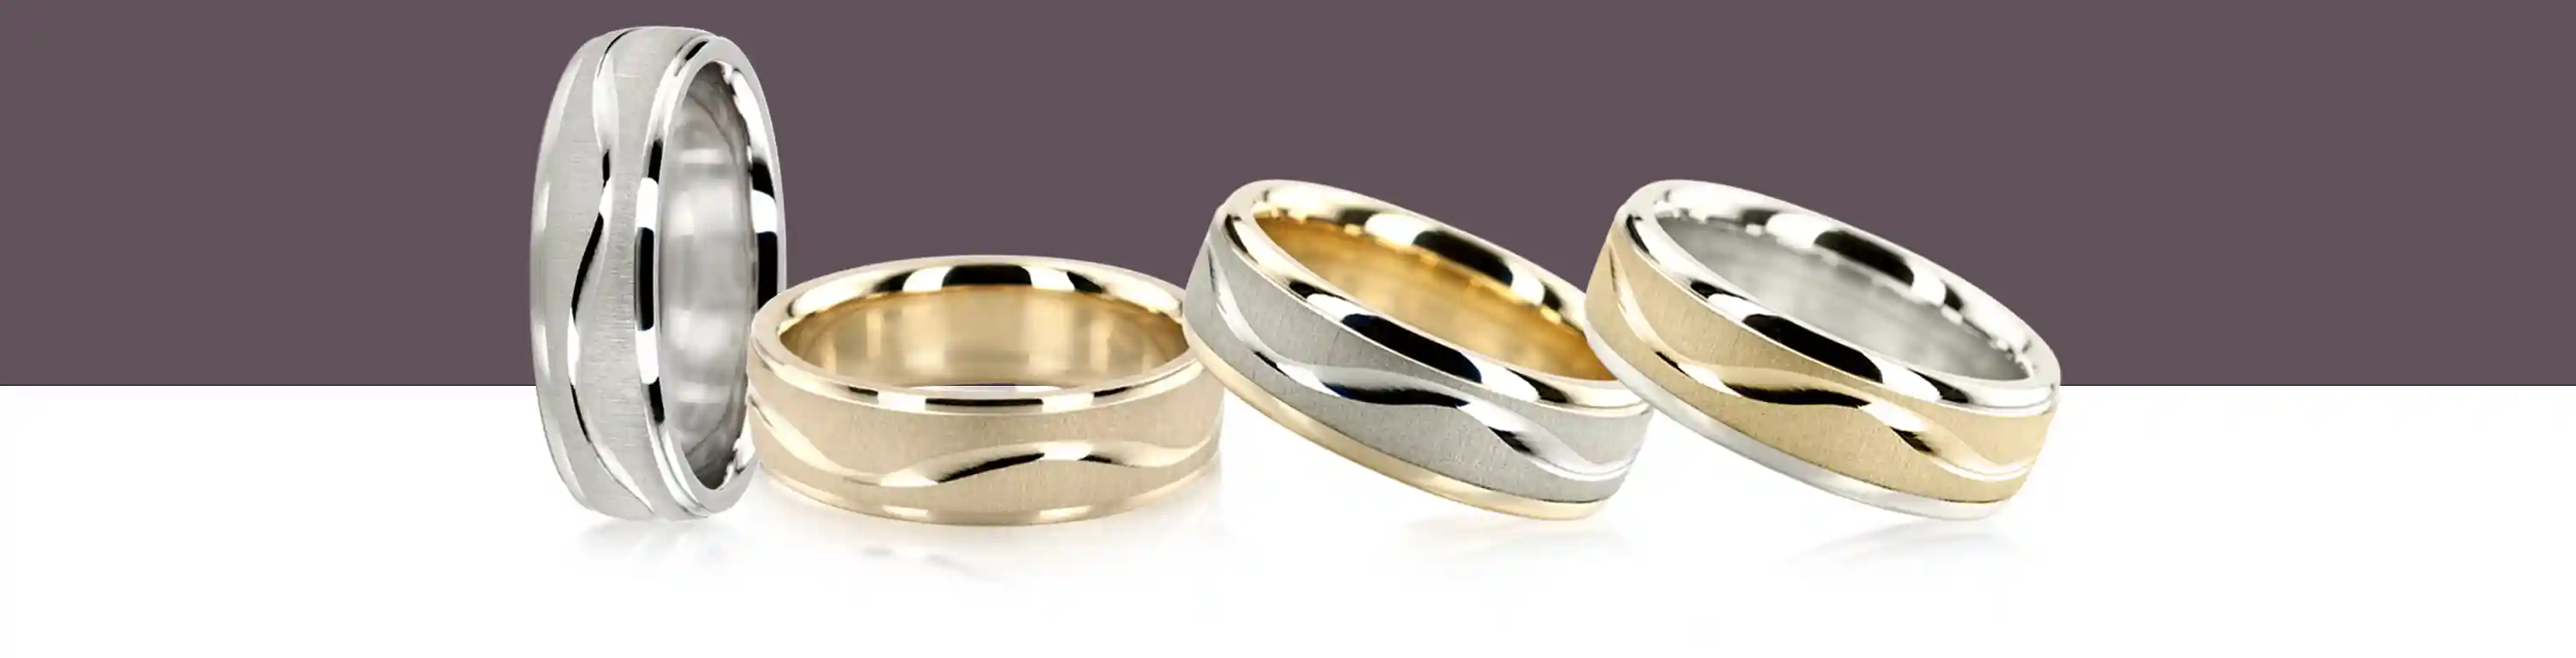 customizable rings